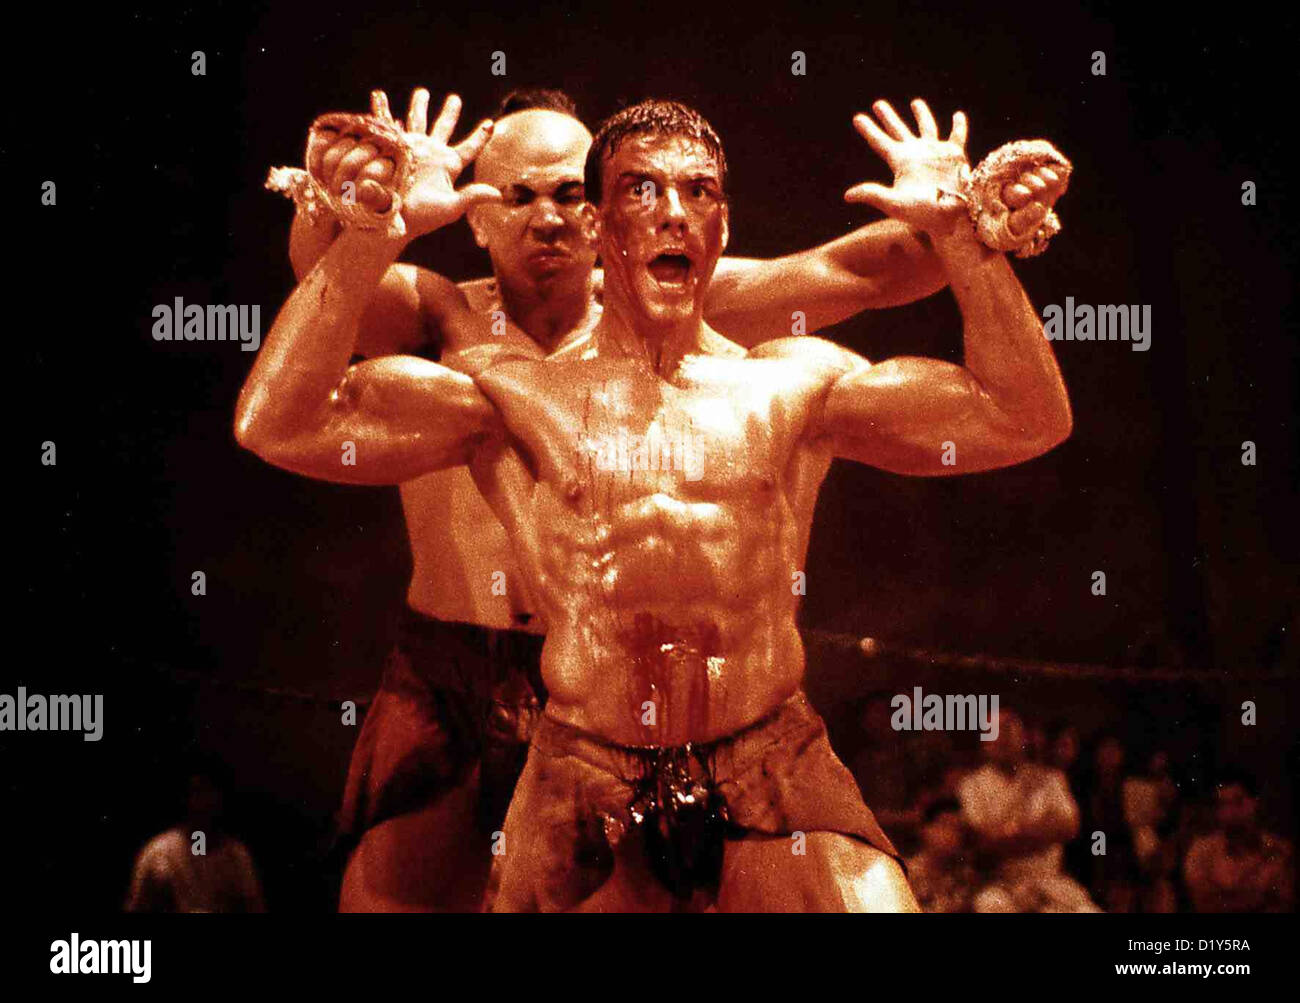 Karate Tiger Iii - Der Kickboxer Kickboxer Jean-Claude van Damme Endlich  ist Kurt (Jean-Claude van Damme,v) so weit, dass er Stock Photo - Alamy